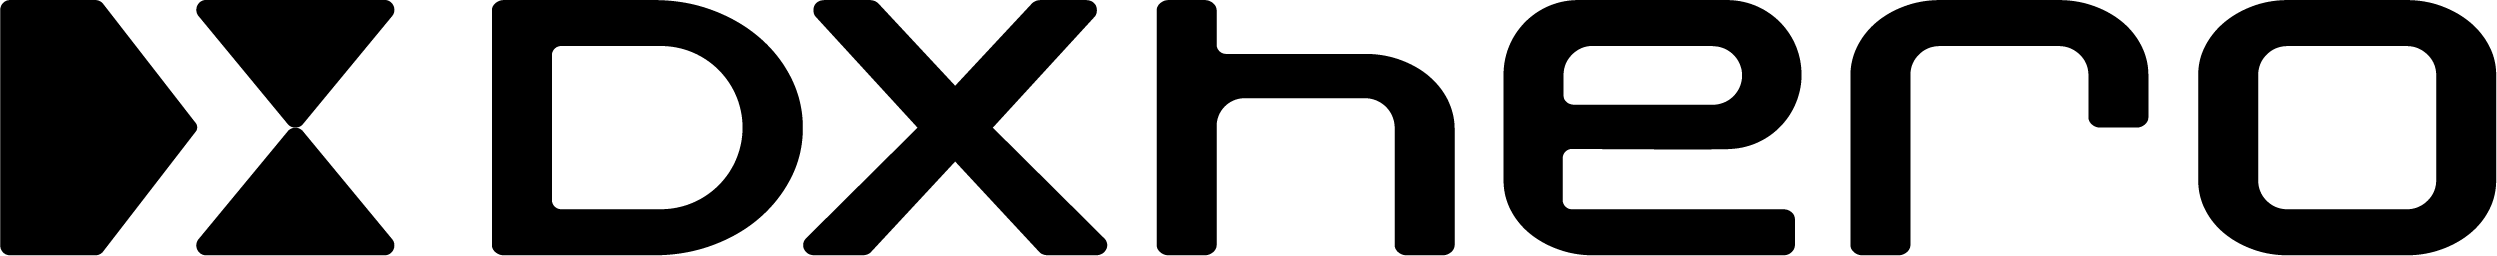 DX Hero Logo in B W 1